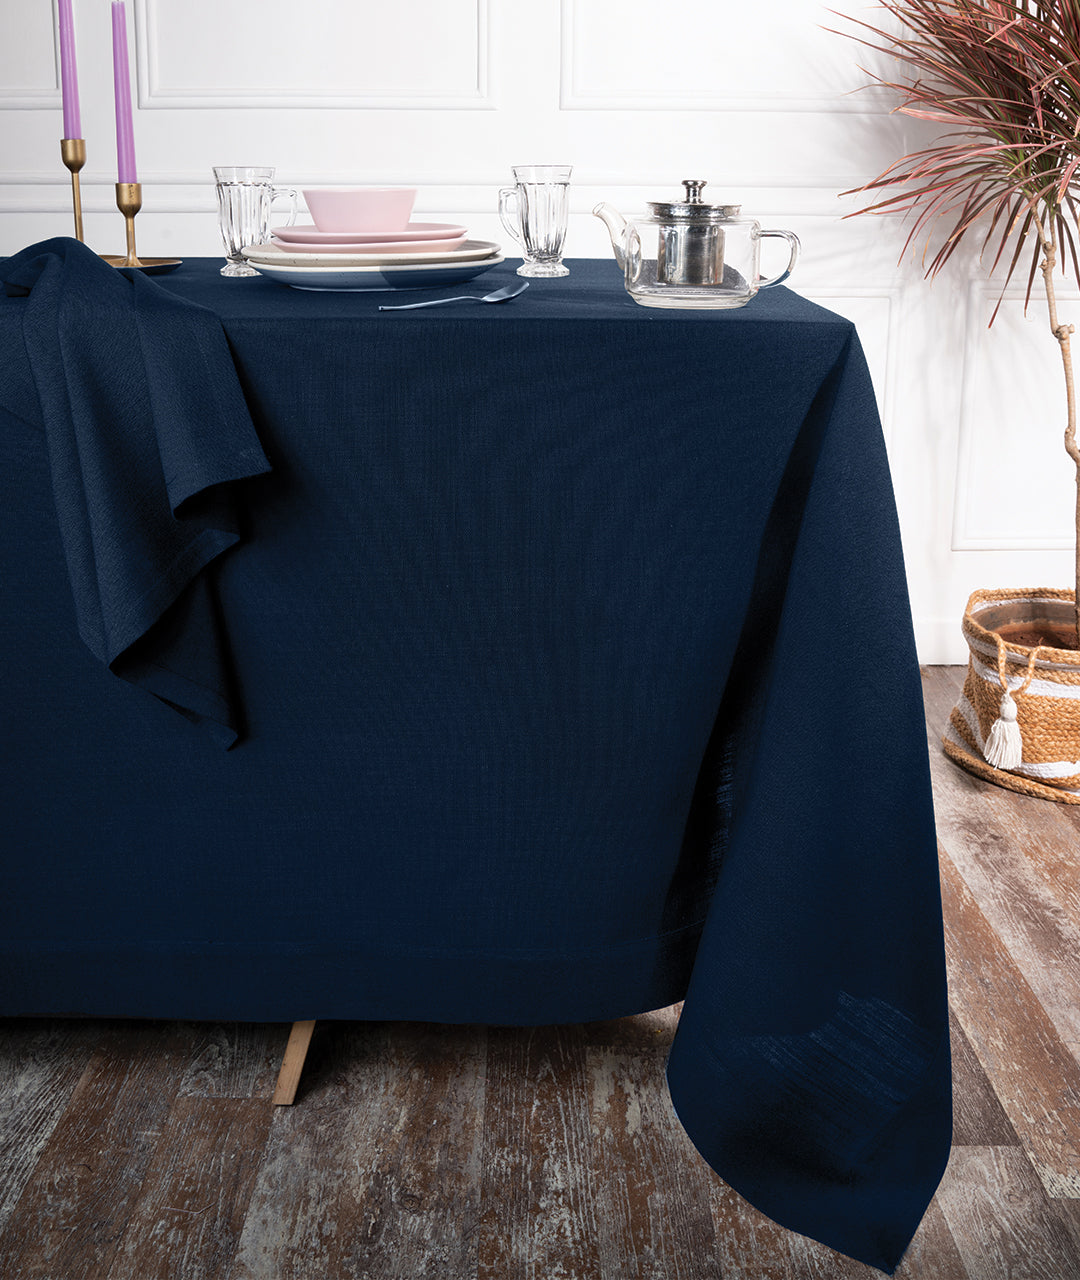 Navy Blue Linen Textured Tablecloth - Mitered Corner